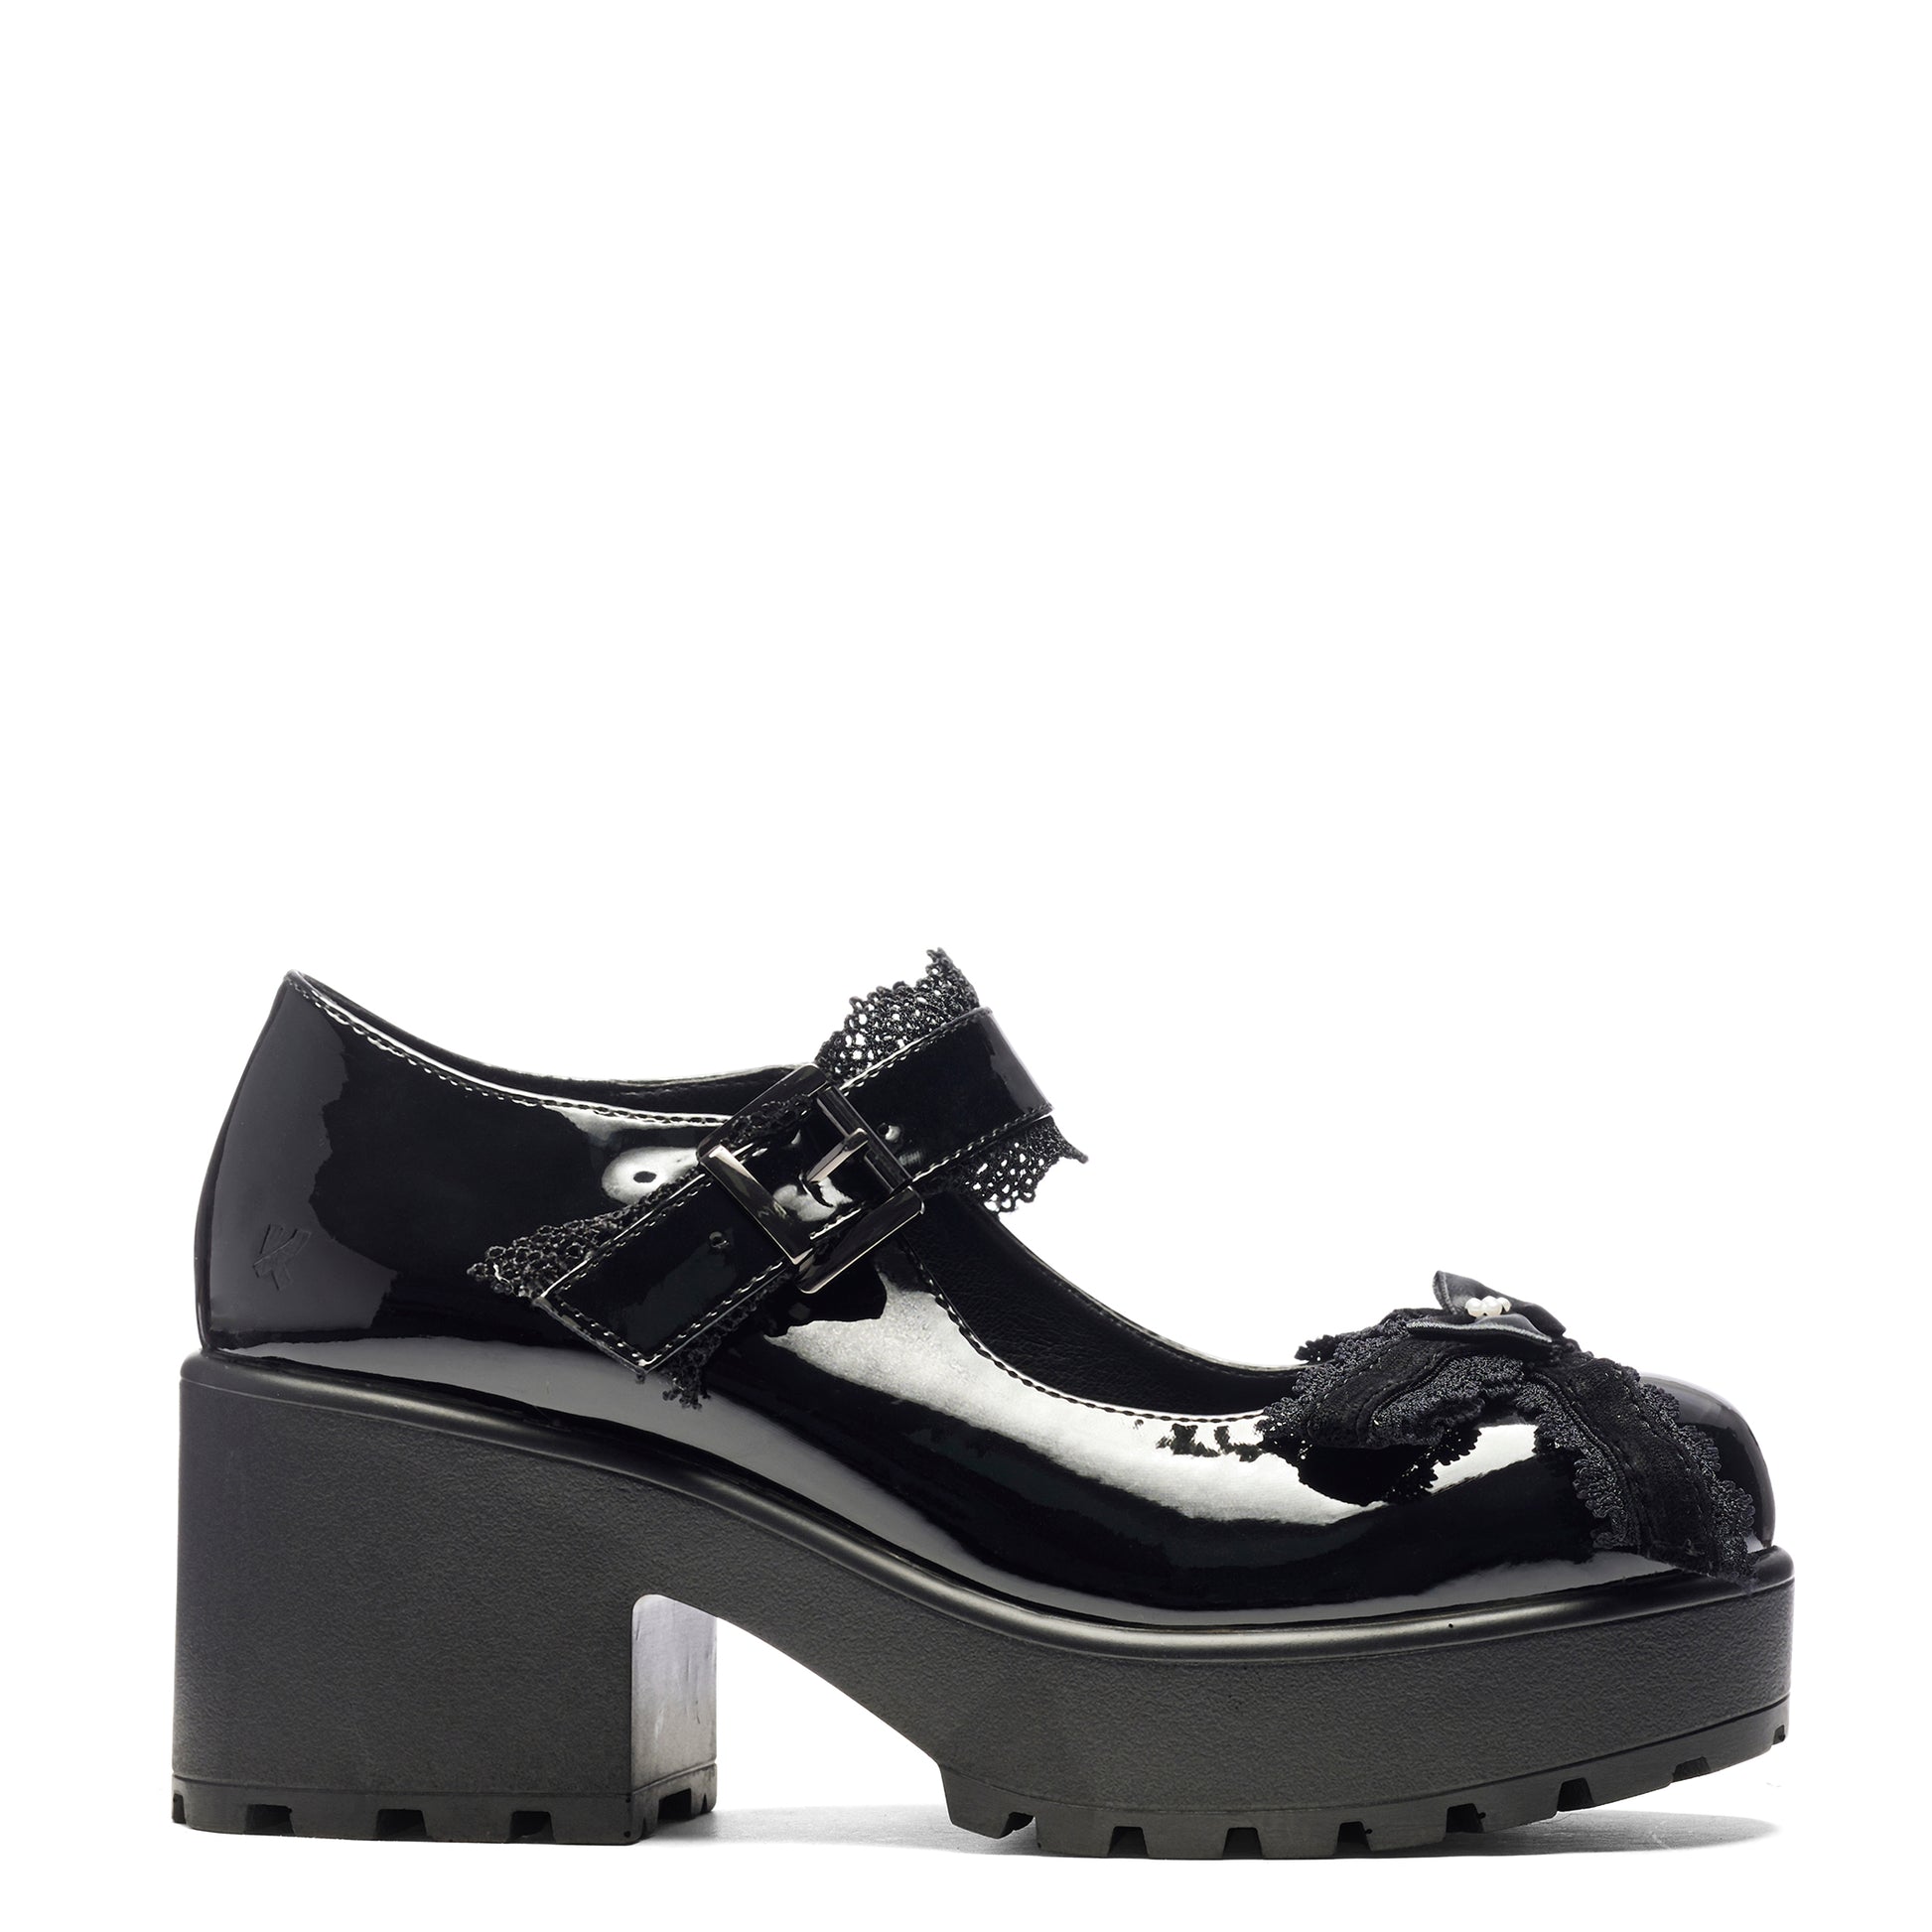 Tira May Jane Shoes 'Cute Gloom Edition' - Black - Koi Footwear - Side View